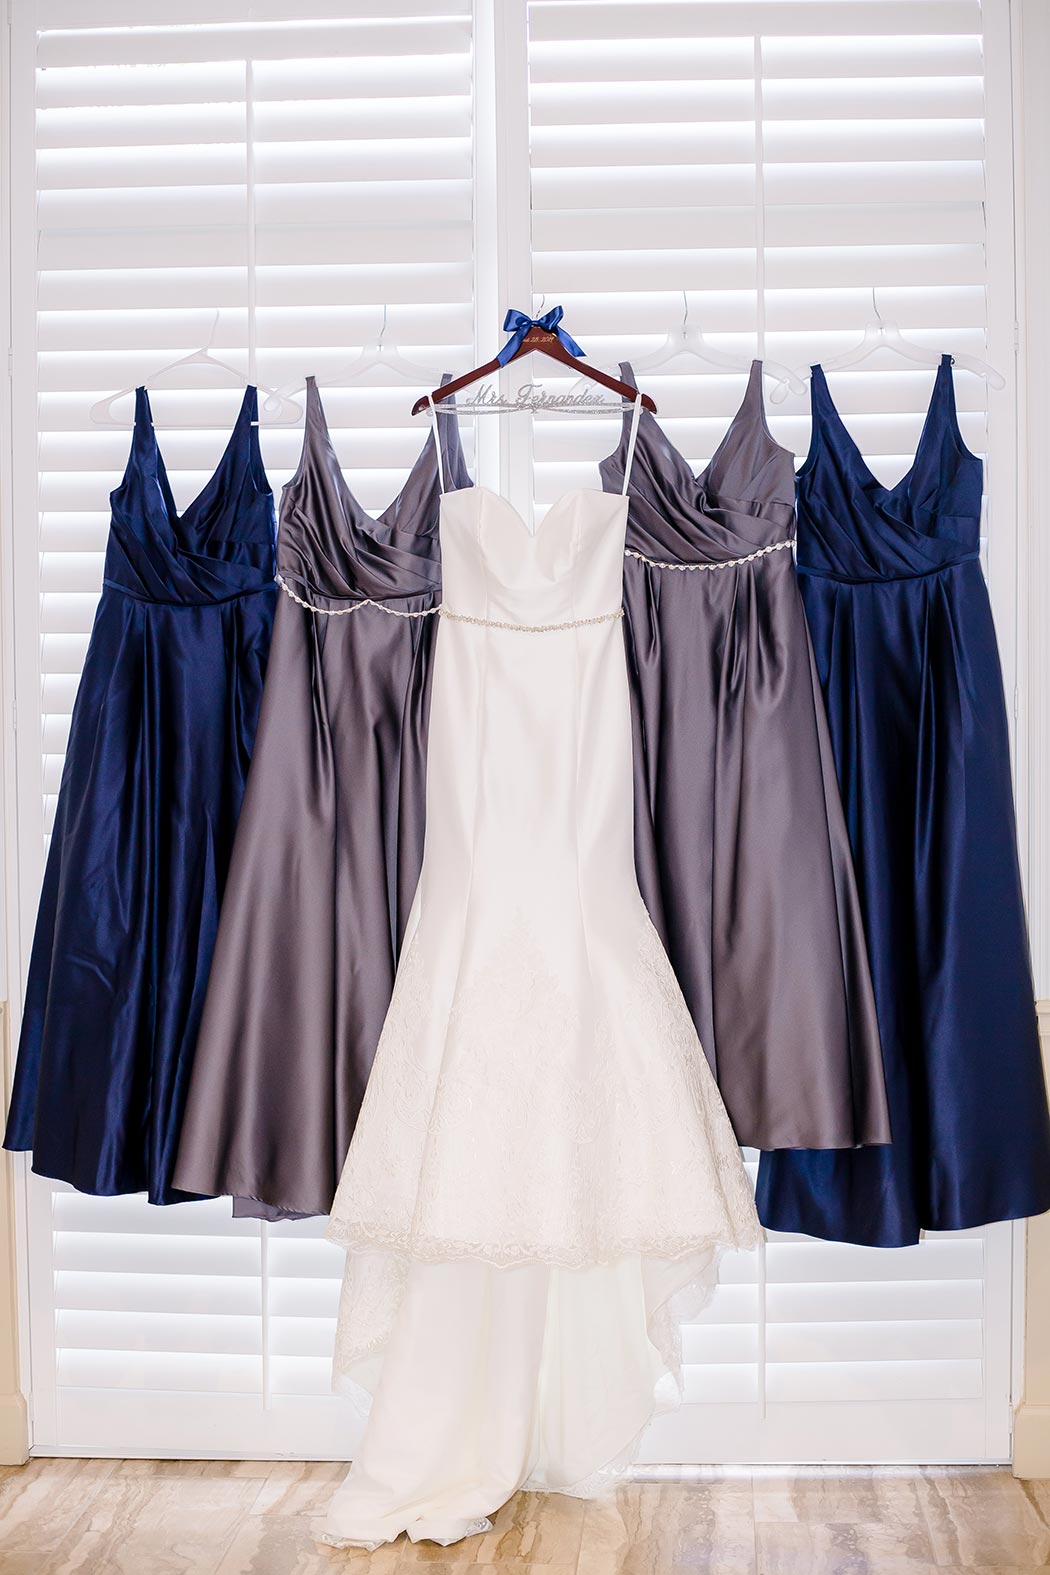 wedding dress detail photograph | hanging wedding dress and bridesmaids dress for wedding photography | alexander couture bridal dress